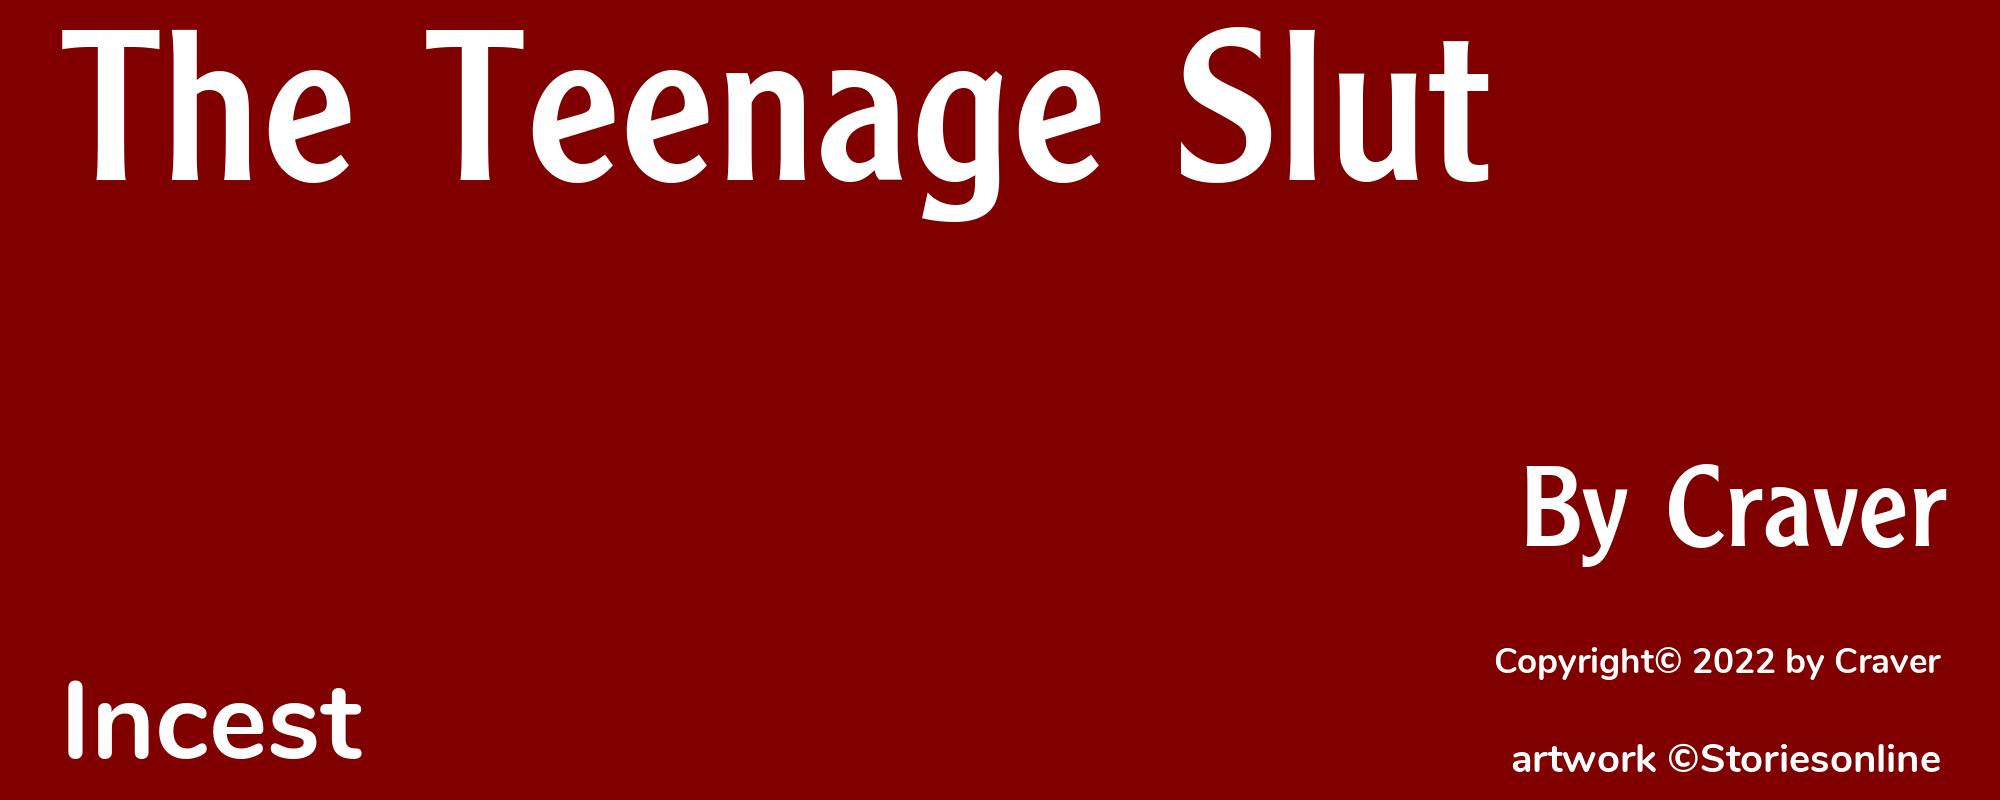 The Teenage Slut - Cover